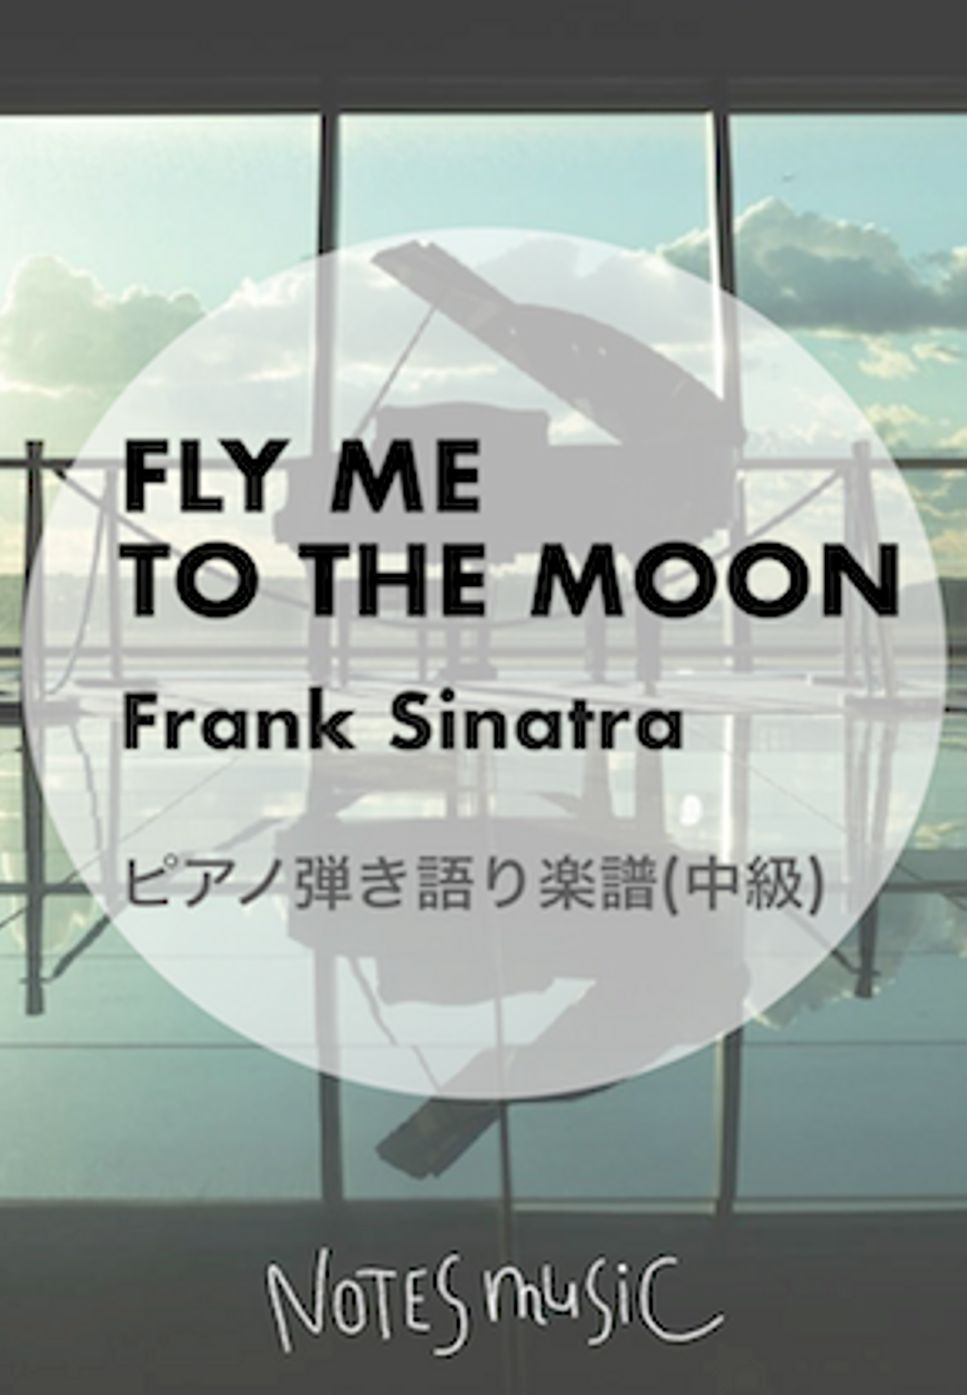 Frank Sinatra - fly me to the moon by Eri Nagayama